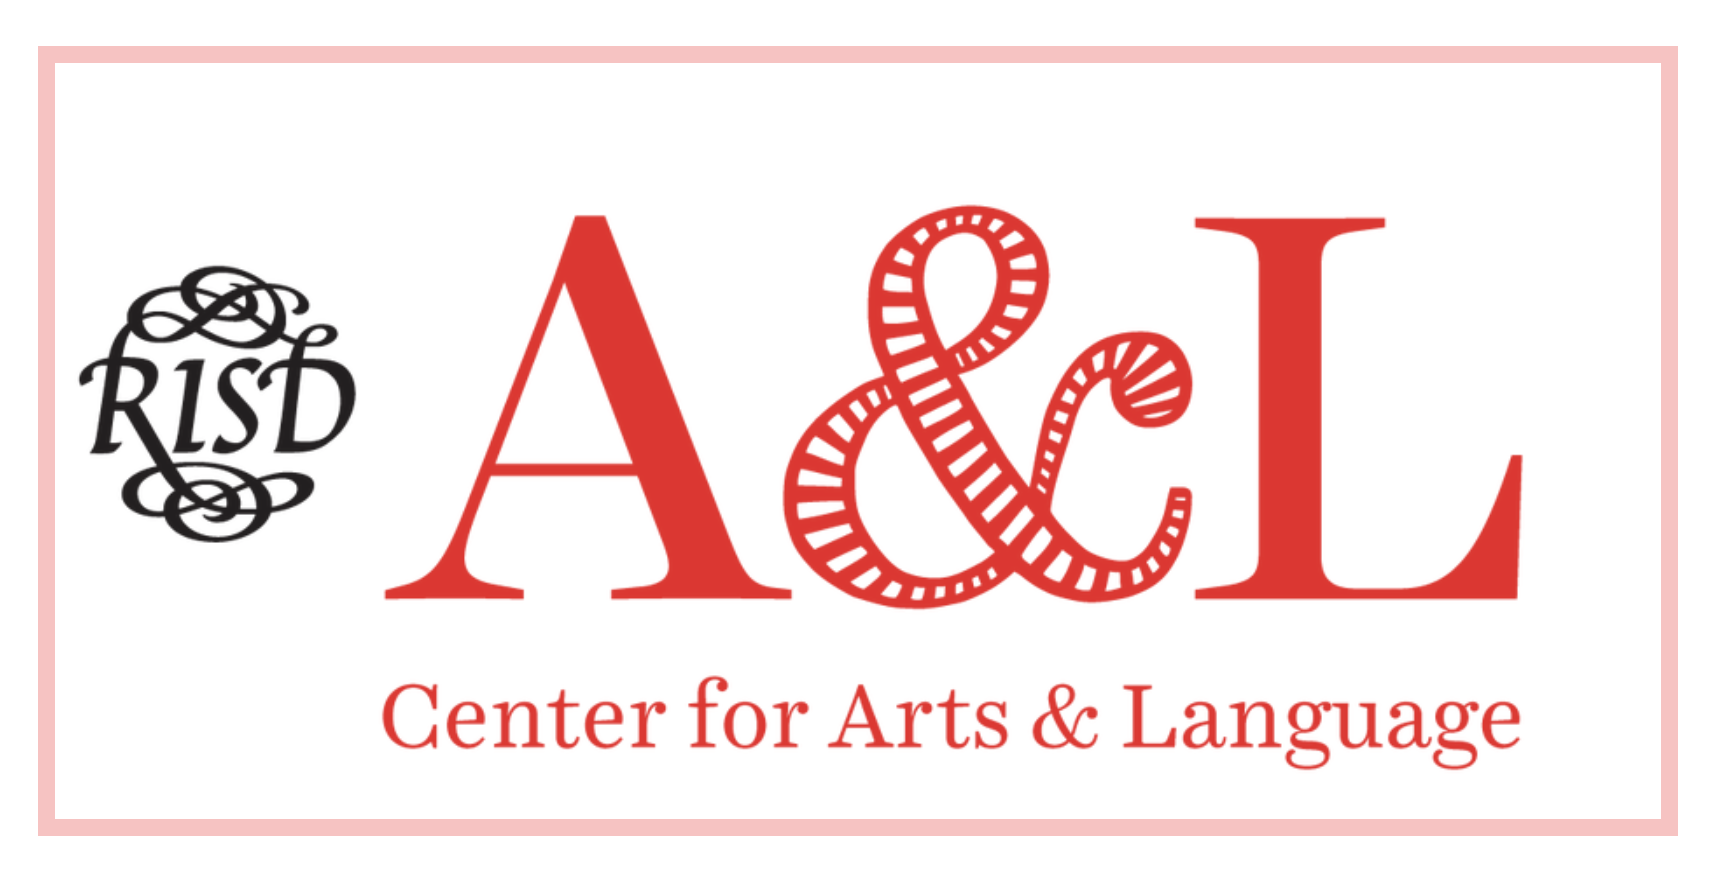 Center for Arts & Language